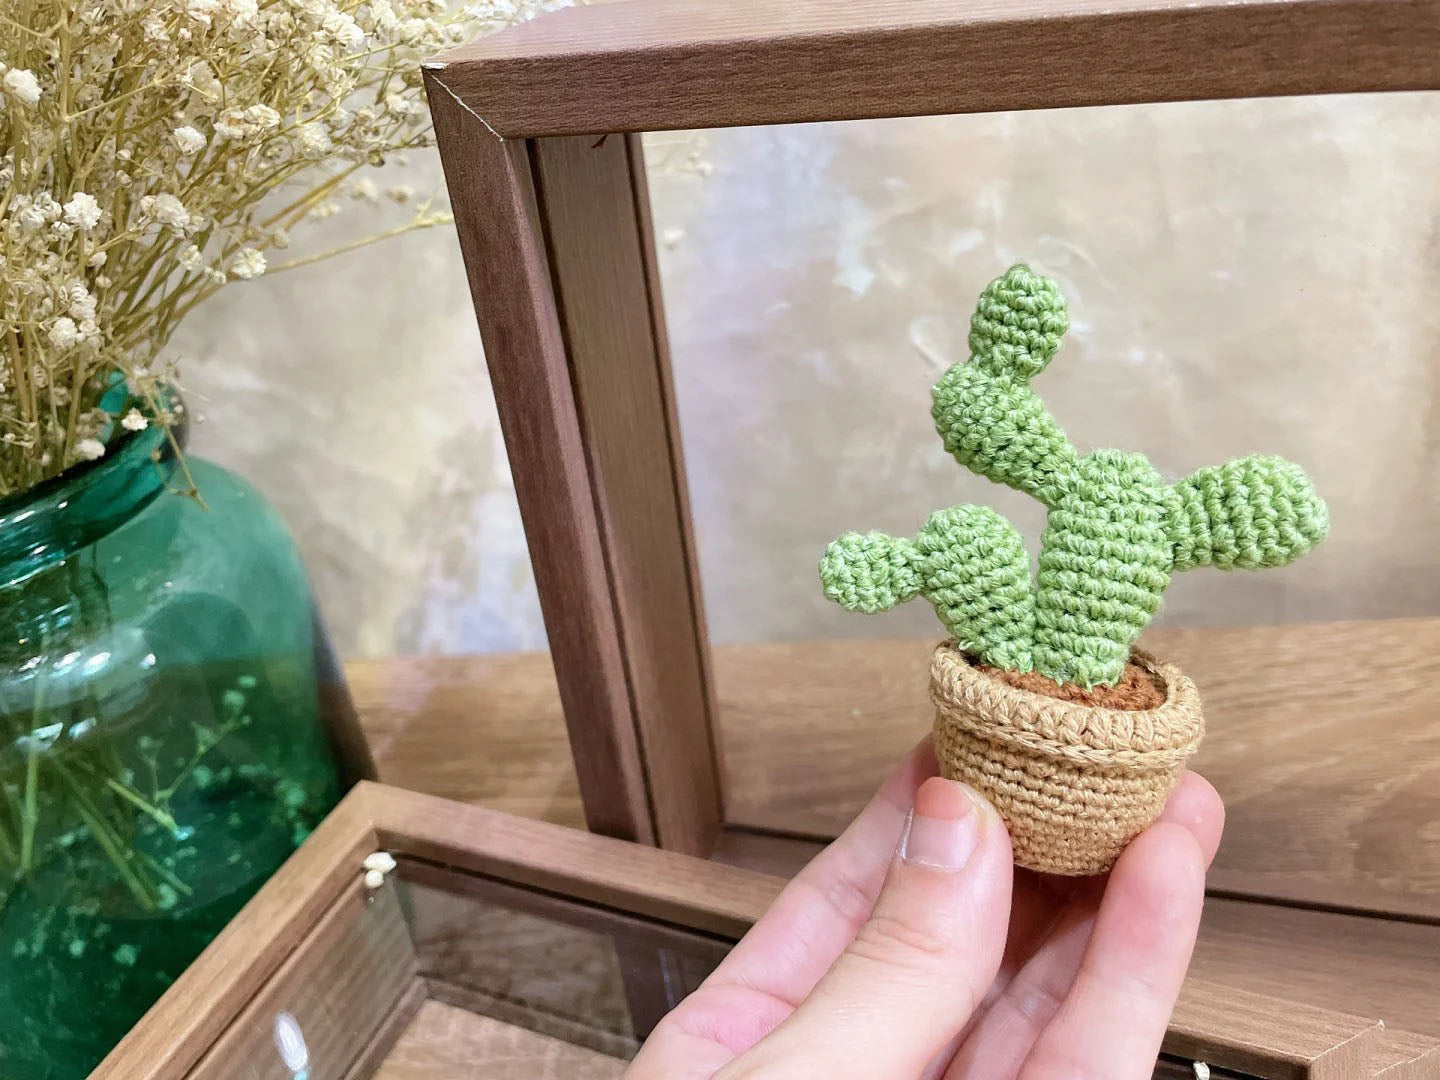 Mini Cactus Crochet Pattern